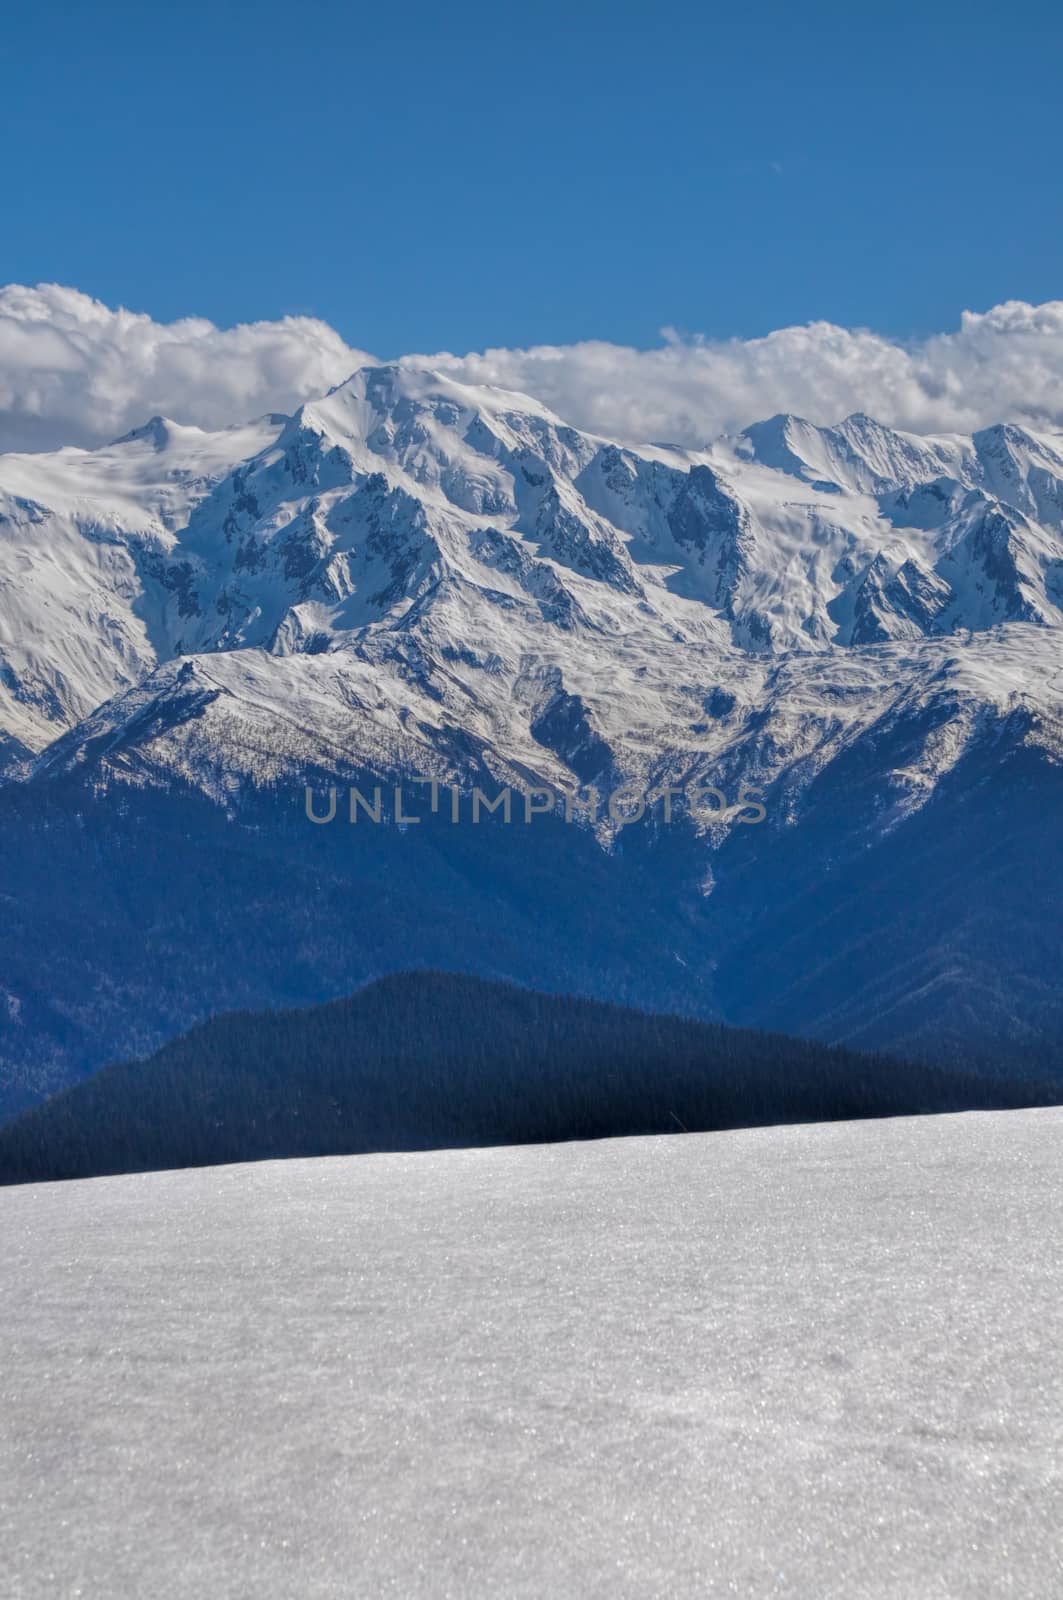 Caucasus Mountains, Svaneti by MichalKnitl